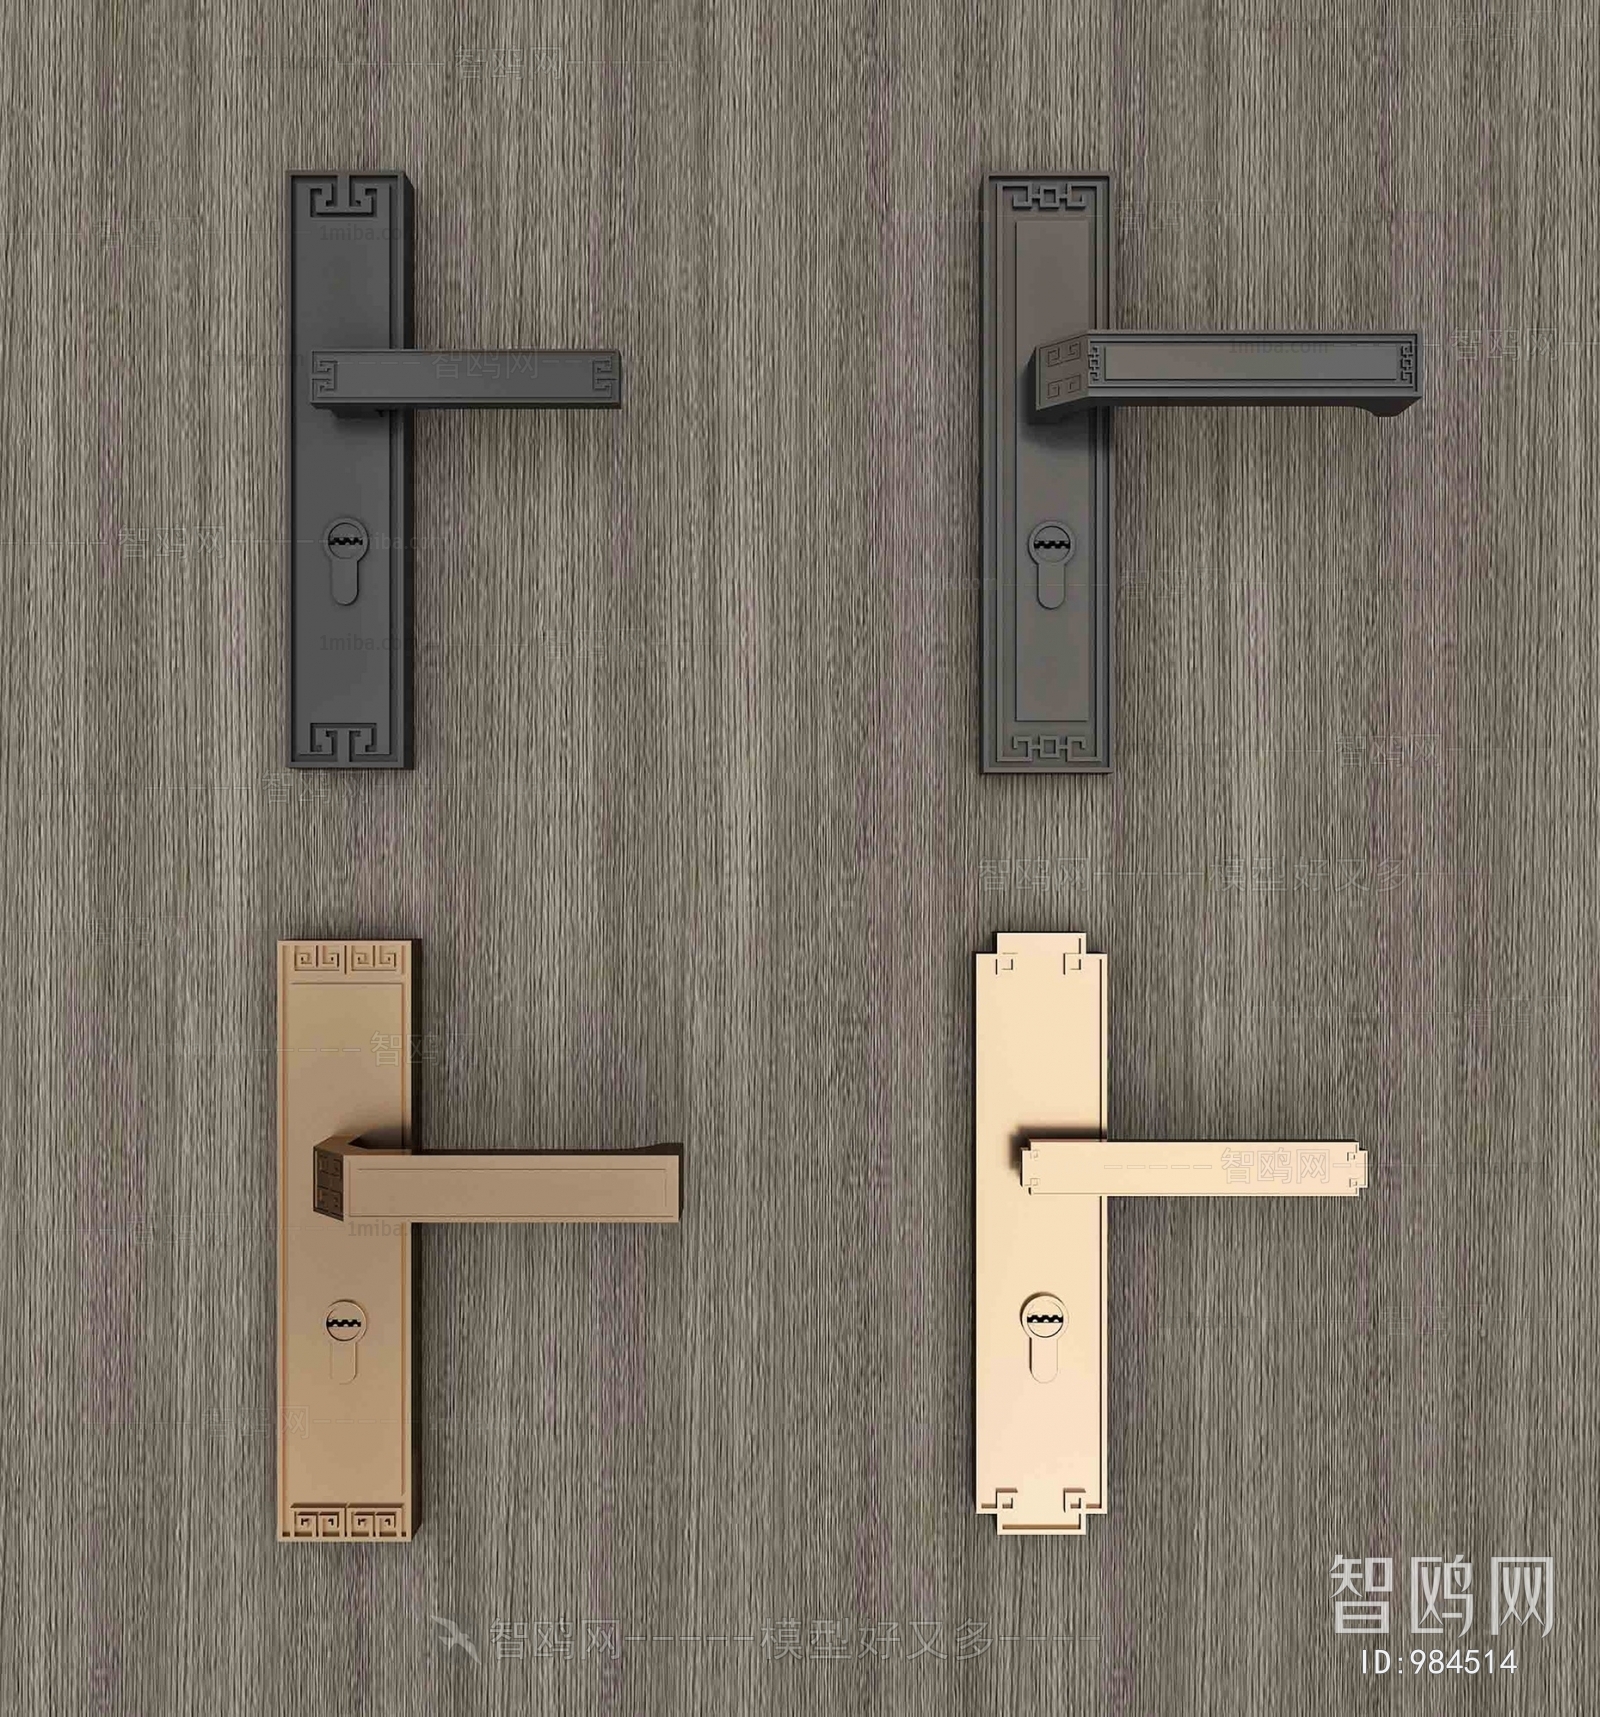 New Chinese Style Door Handle